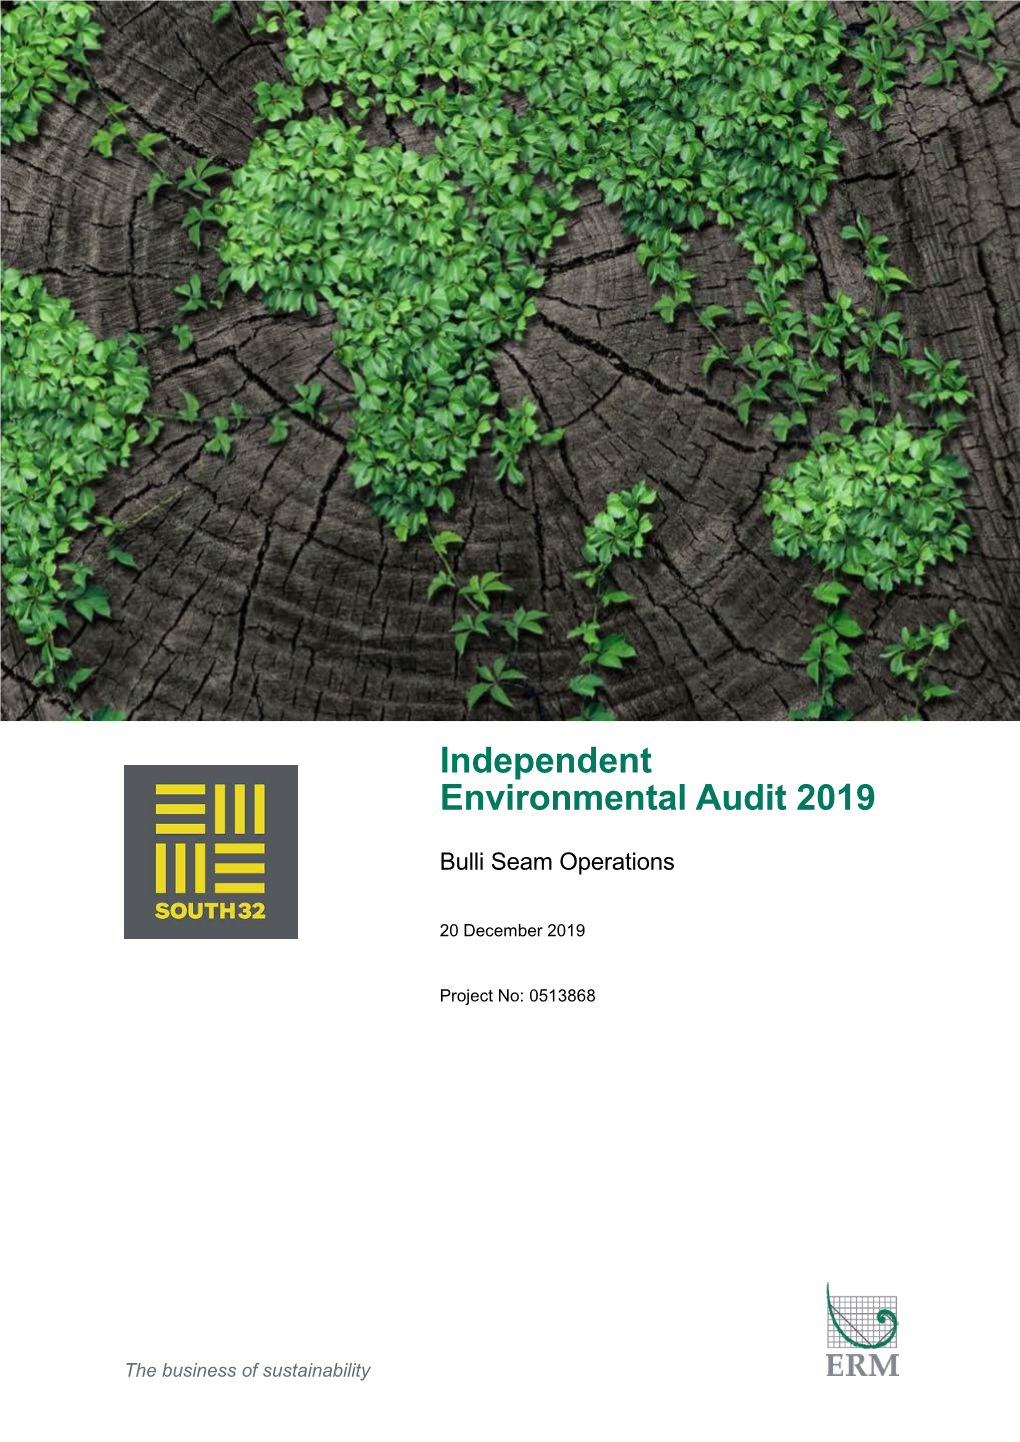 Independent Environmental Audit 2019